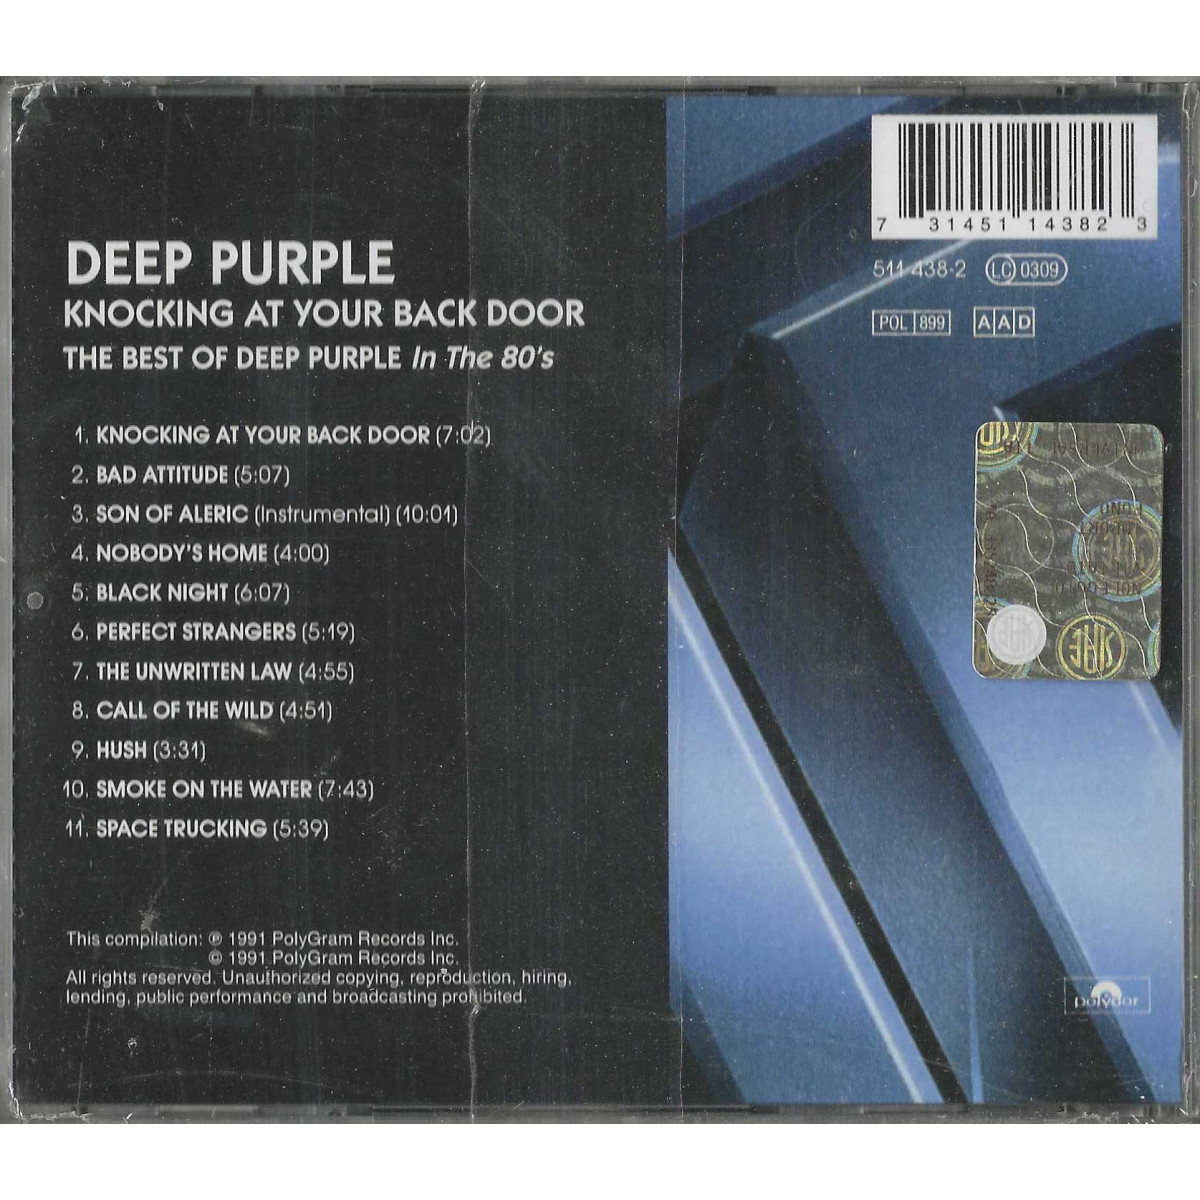 https://erecord.it/71299-Ebay-Image/deep-purple-cd-best-of-knocking-at-your-back-door-polydor-5114382-sigillato.jpg